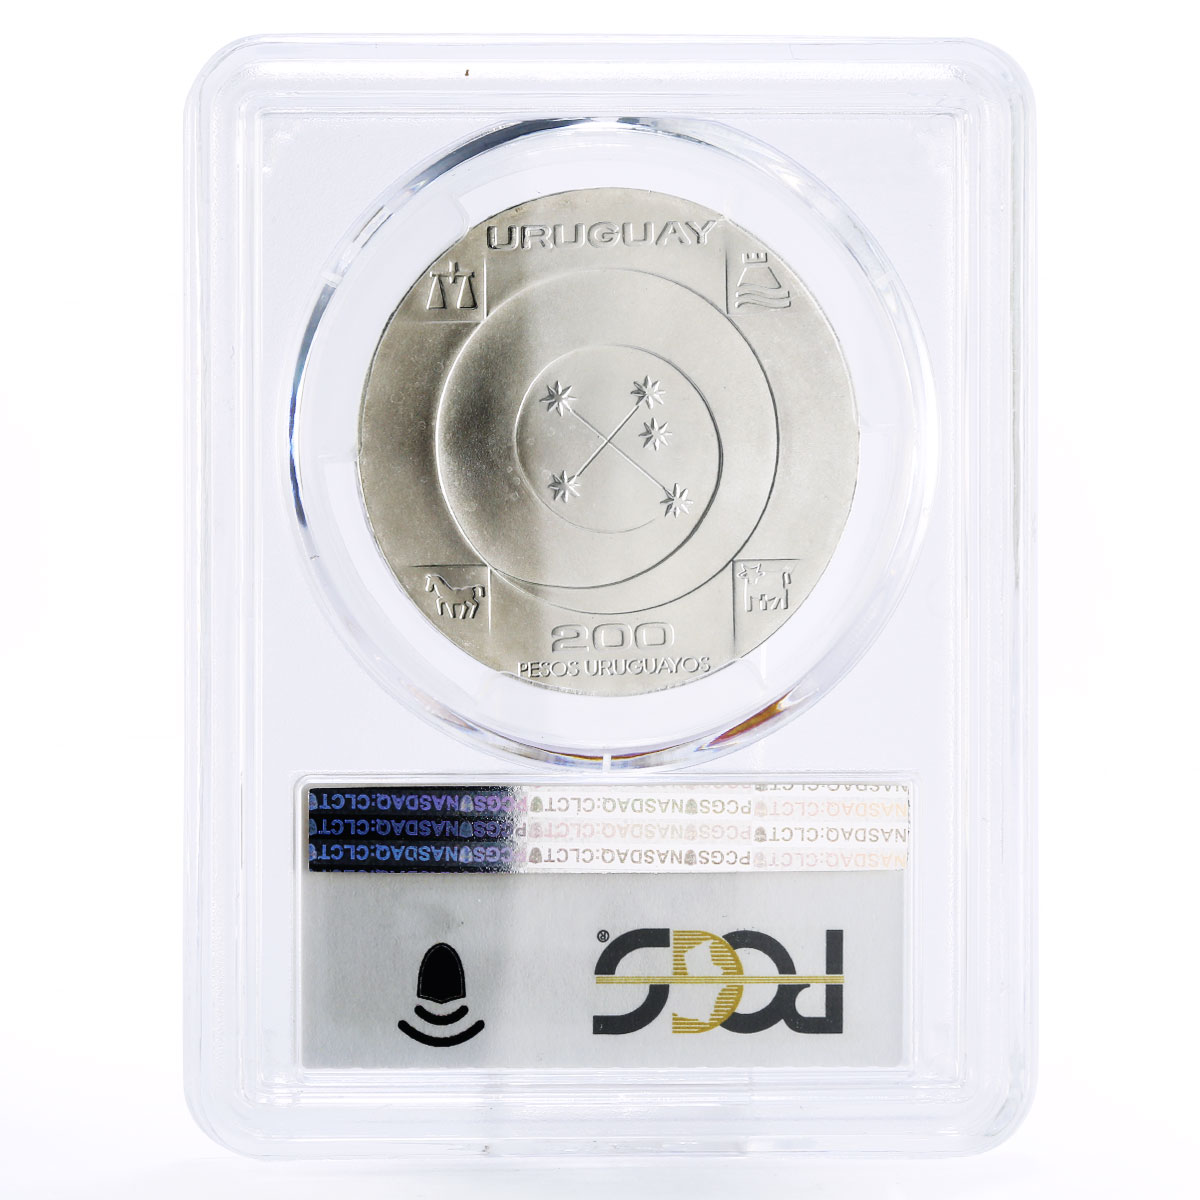 Uruguay 200 pesos Millennium Symbols Ornament MS69 PCGS silver coin 1999